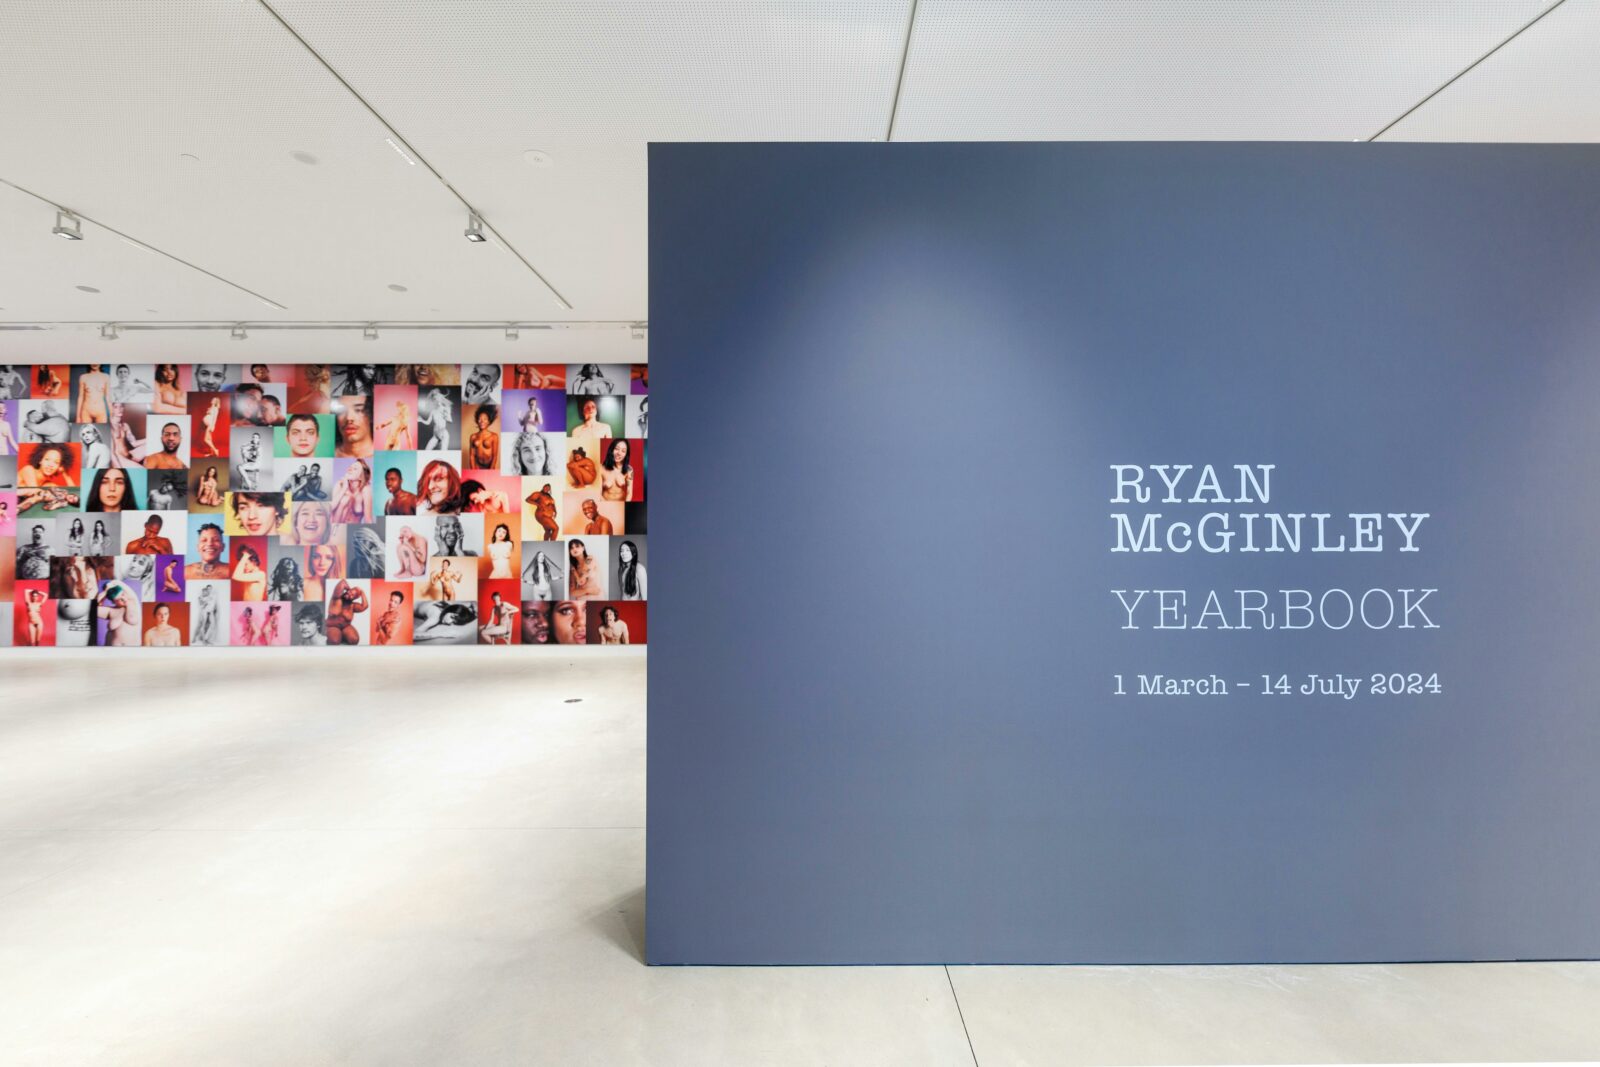 Ryan McGinley, YEARBOOK, installation view, Shepparton Art Museum, 2024. Photo: Cam Matheson